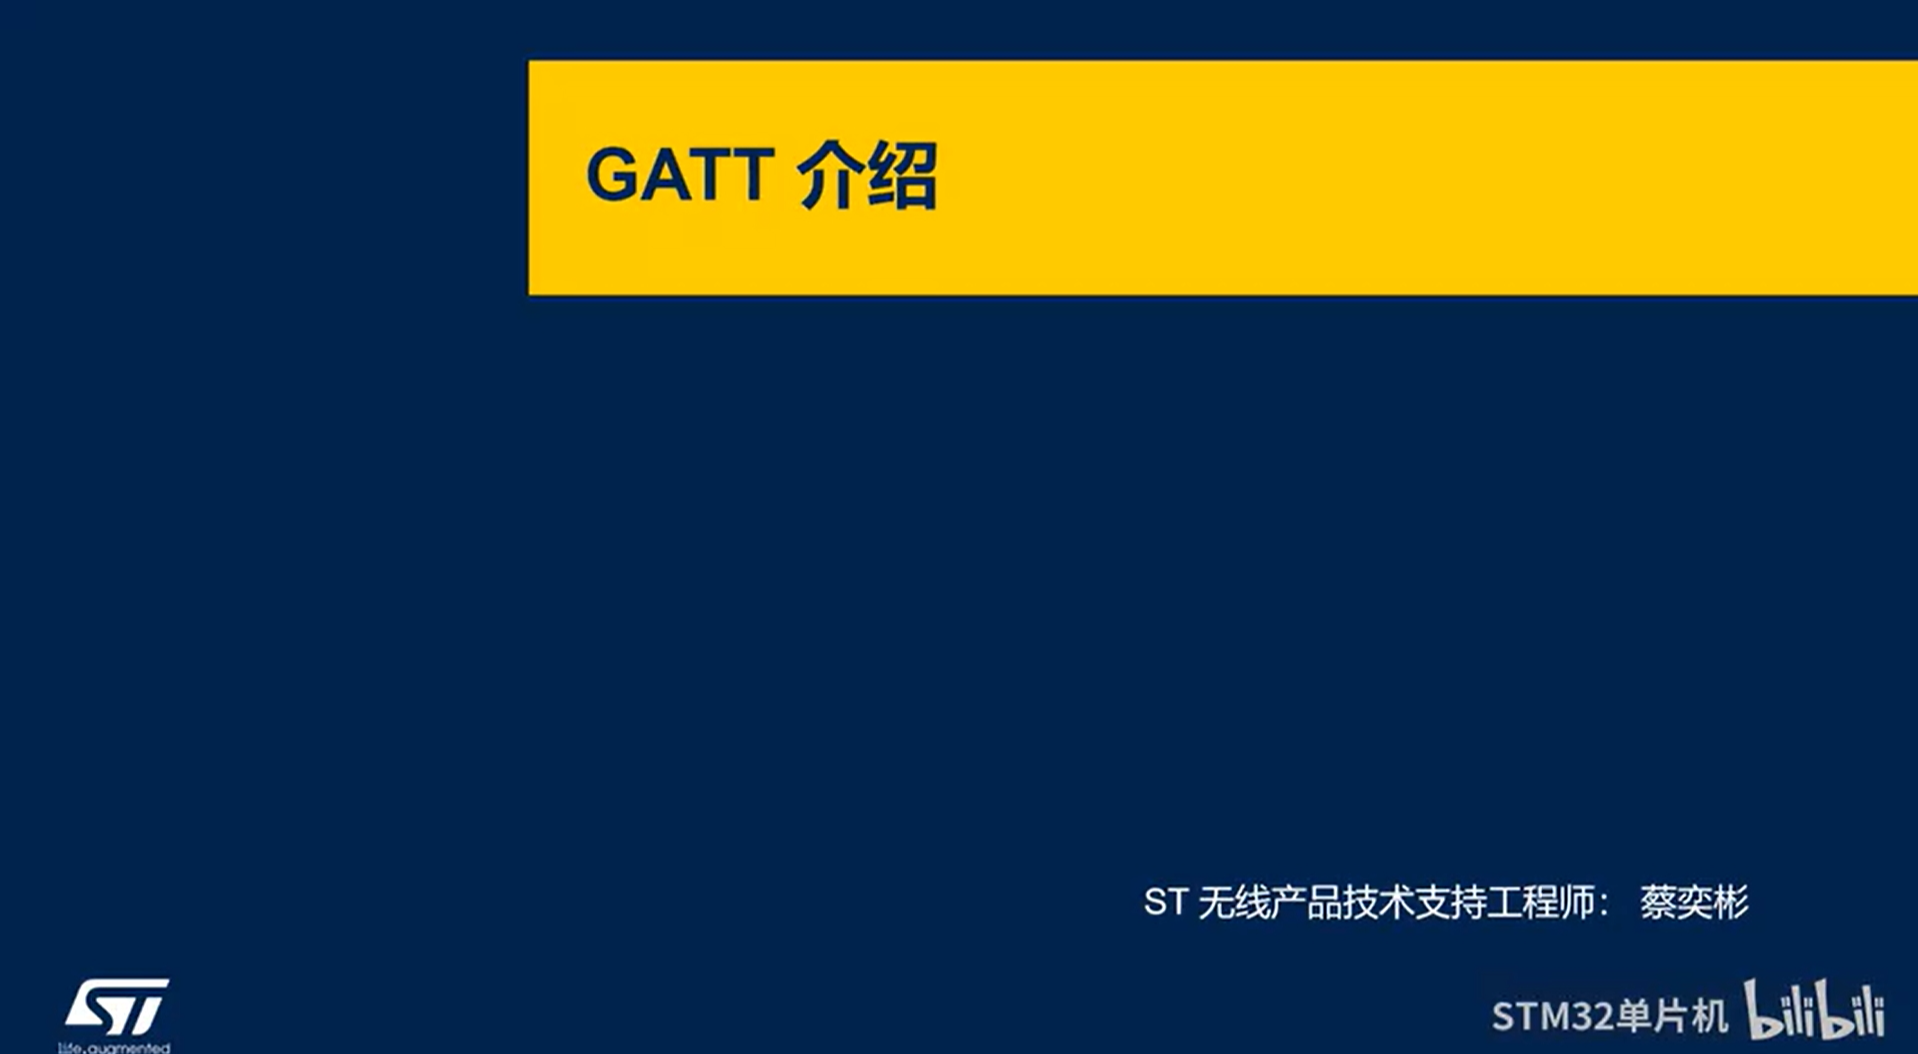 【BLE系列课】6.4.1 GATT 概念入门